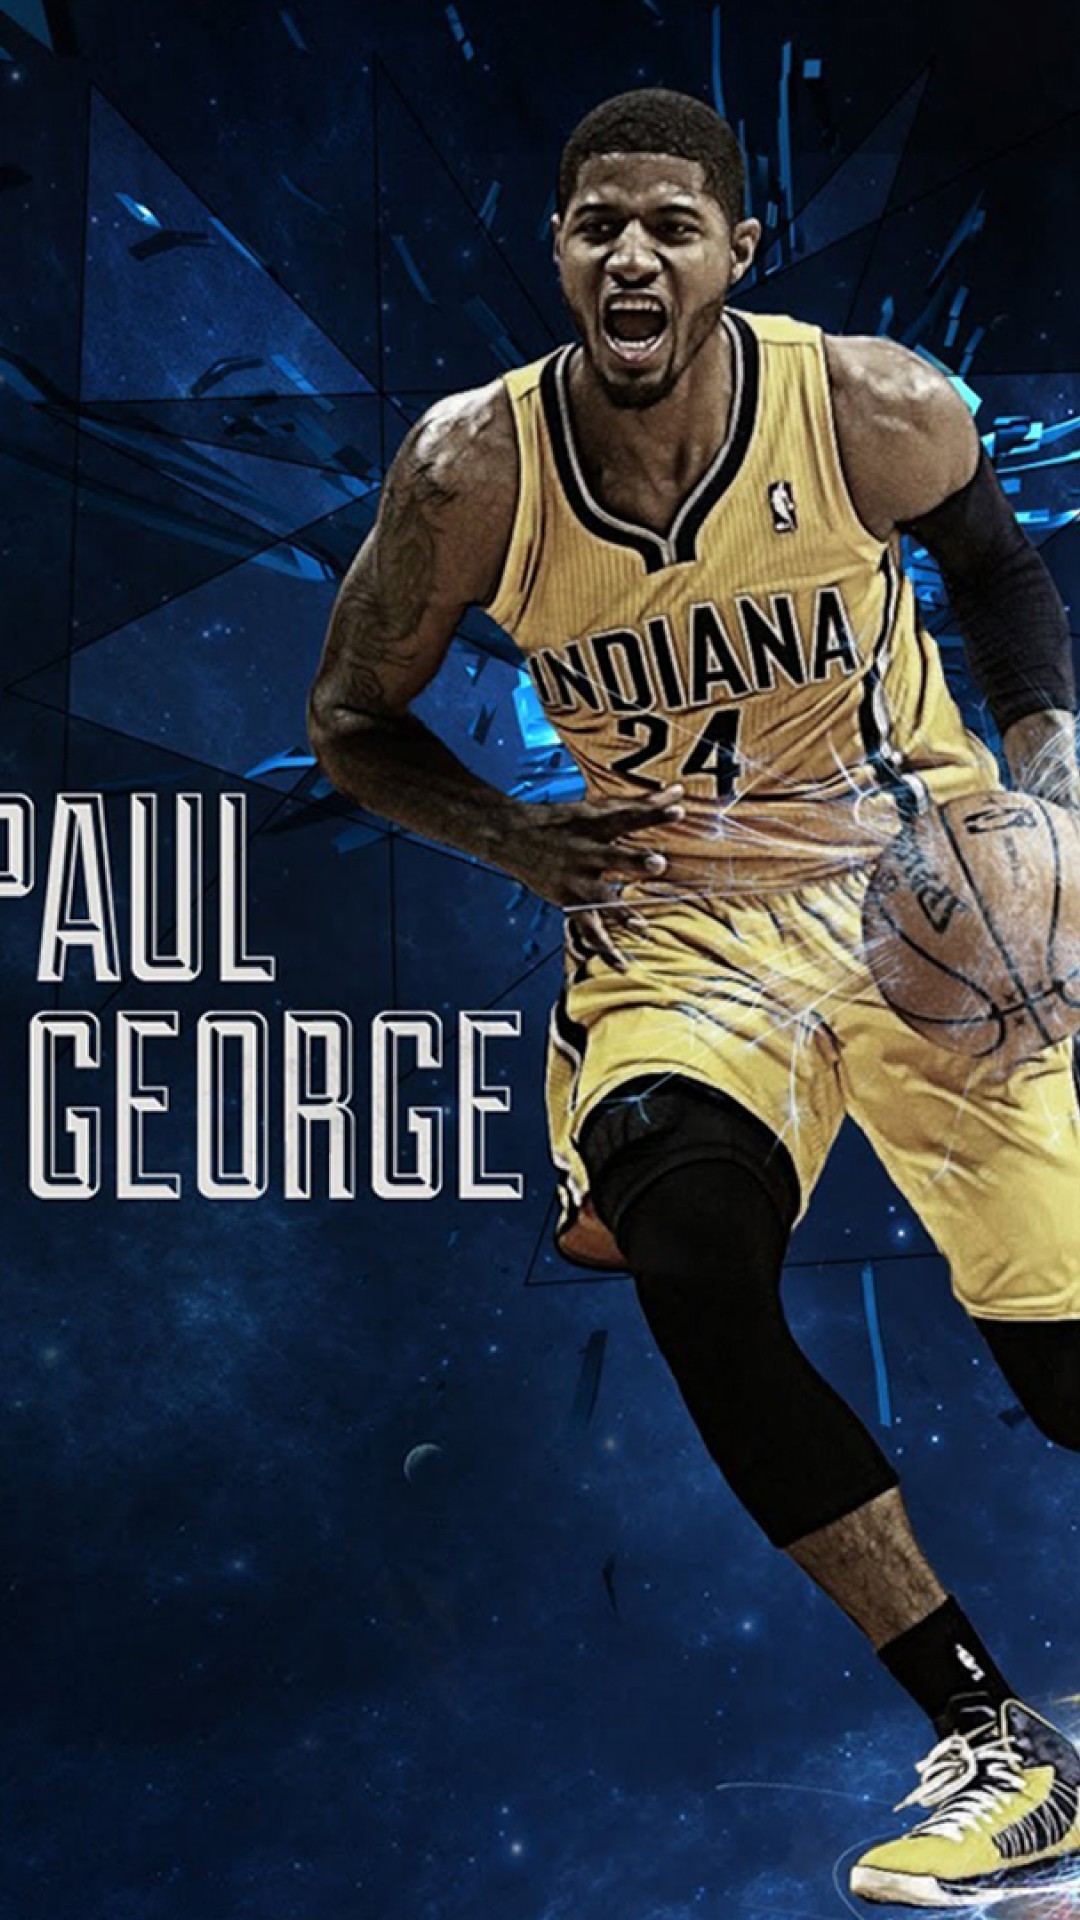 paul george wallpaper,basketball player,basketball,basketball moves,team sport,sports